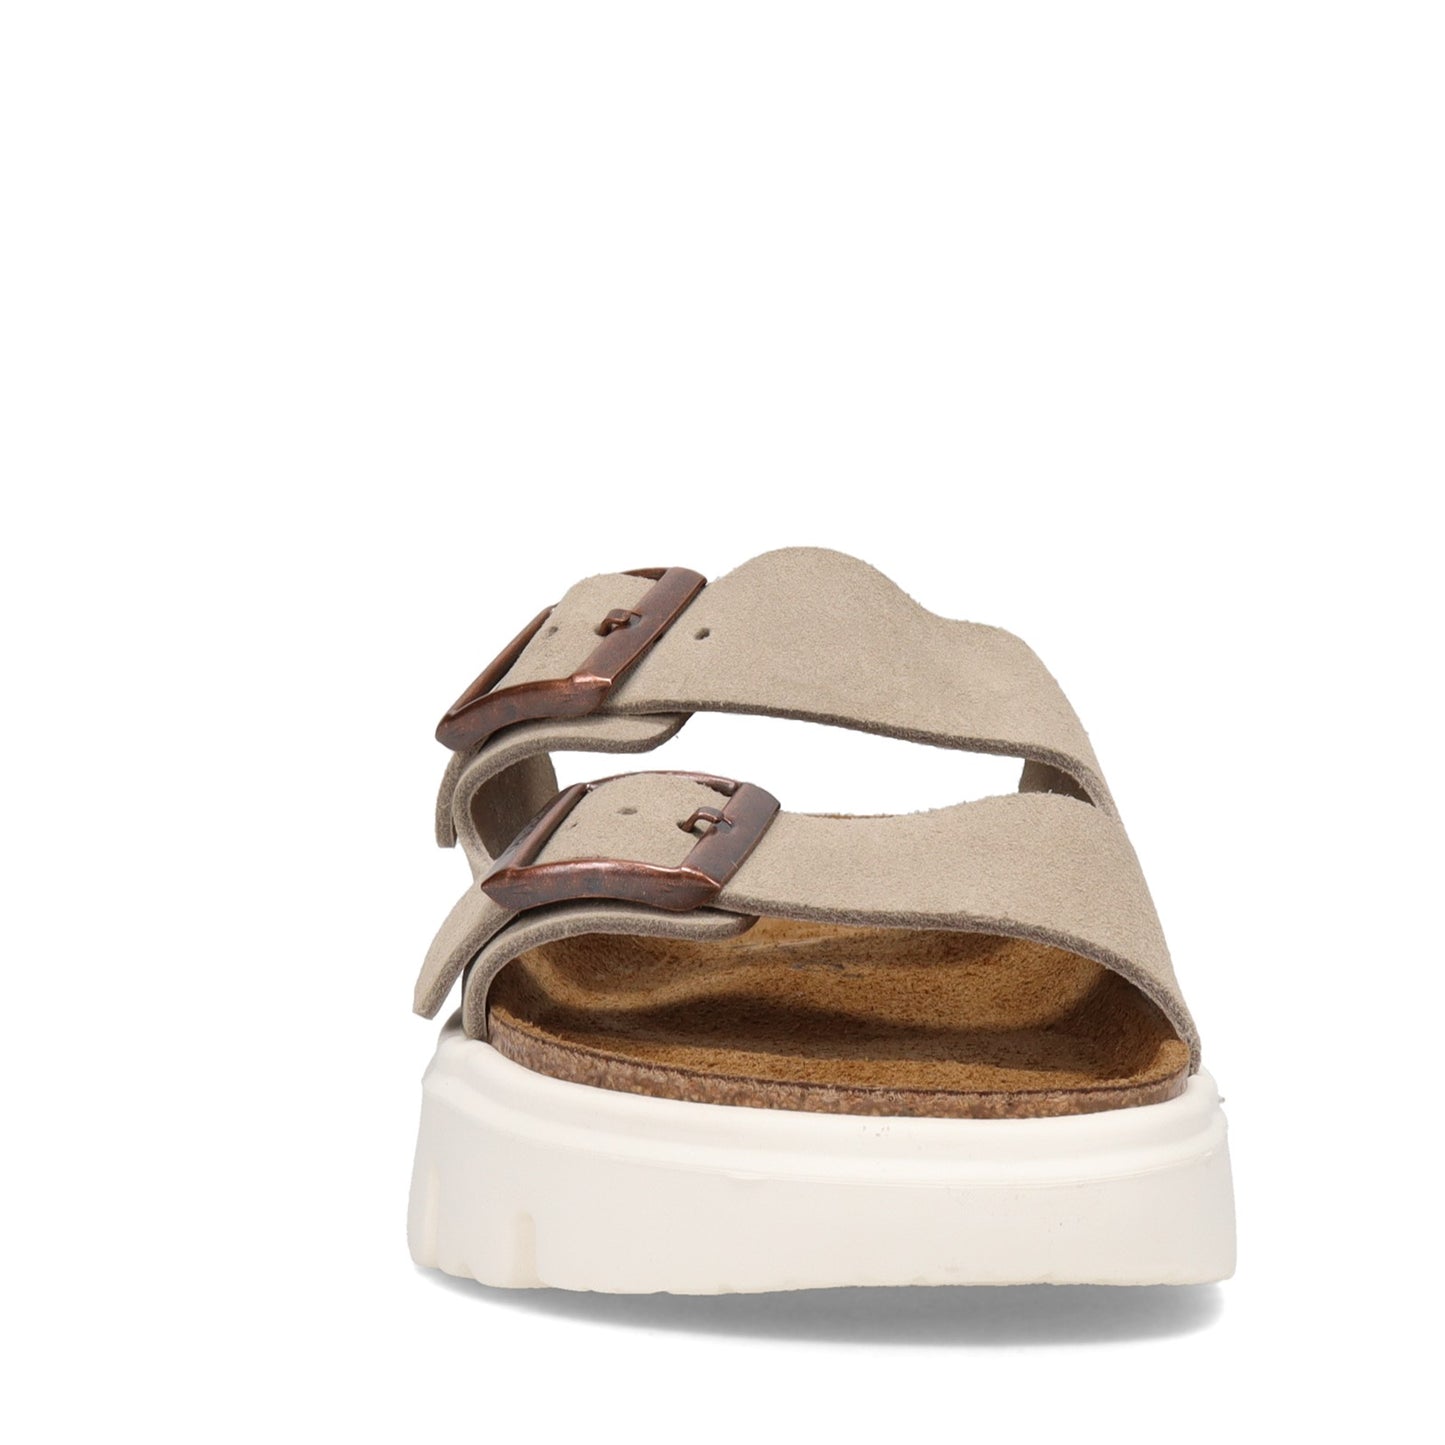 Peltz Shoes  Women's Birkenstock Arizona Chunky Sandal - Narrow Fit TAUPE 1018 135 N